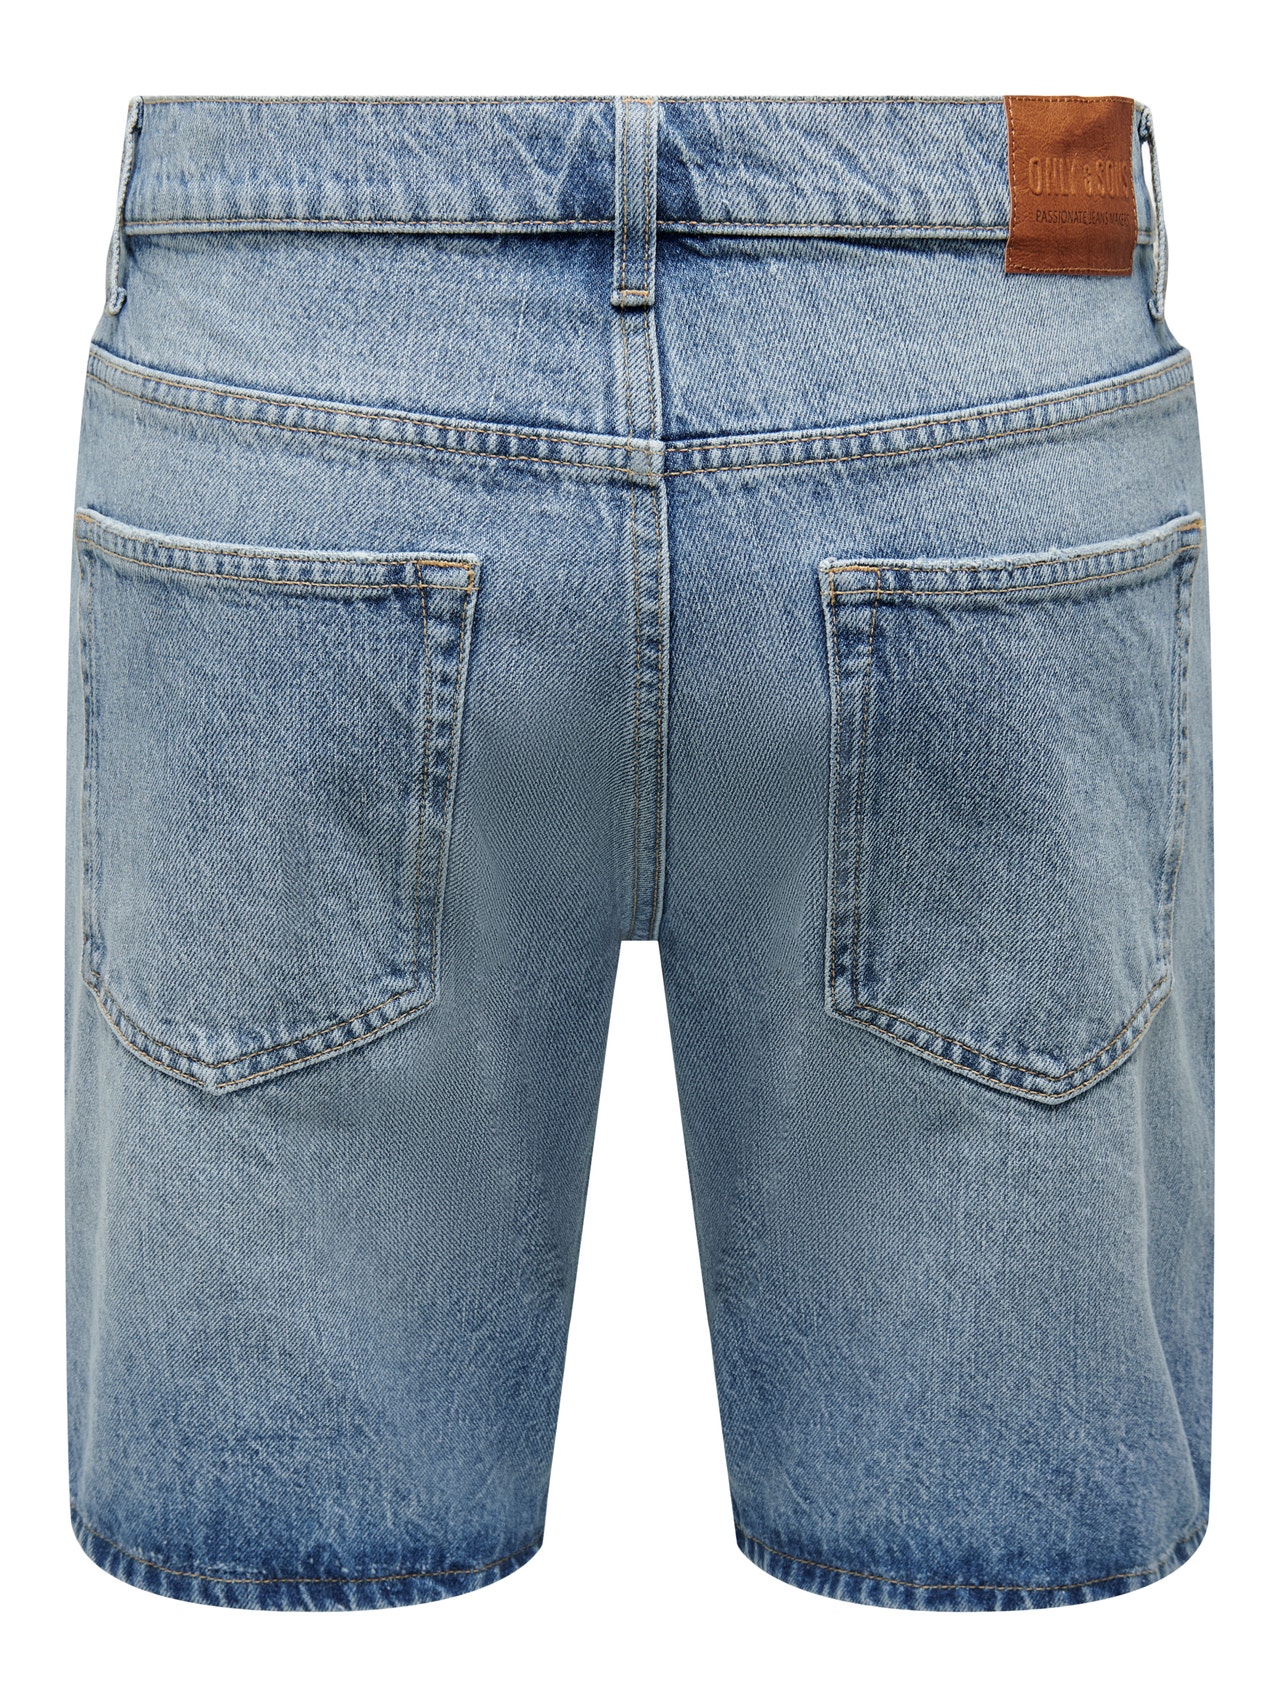 ONLY & SONS Straight fit denim shorts -Light Blue Denim - 22026092